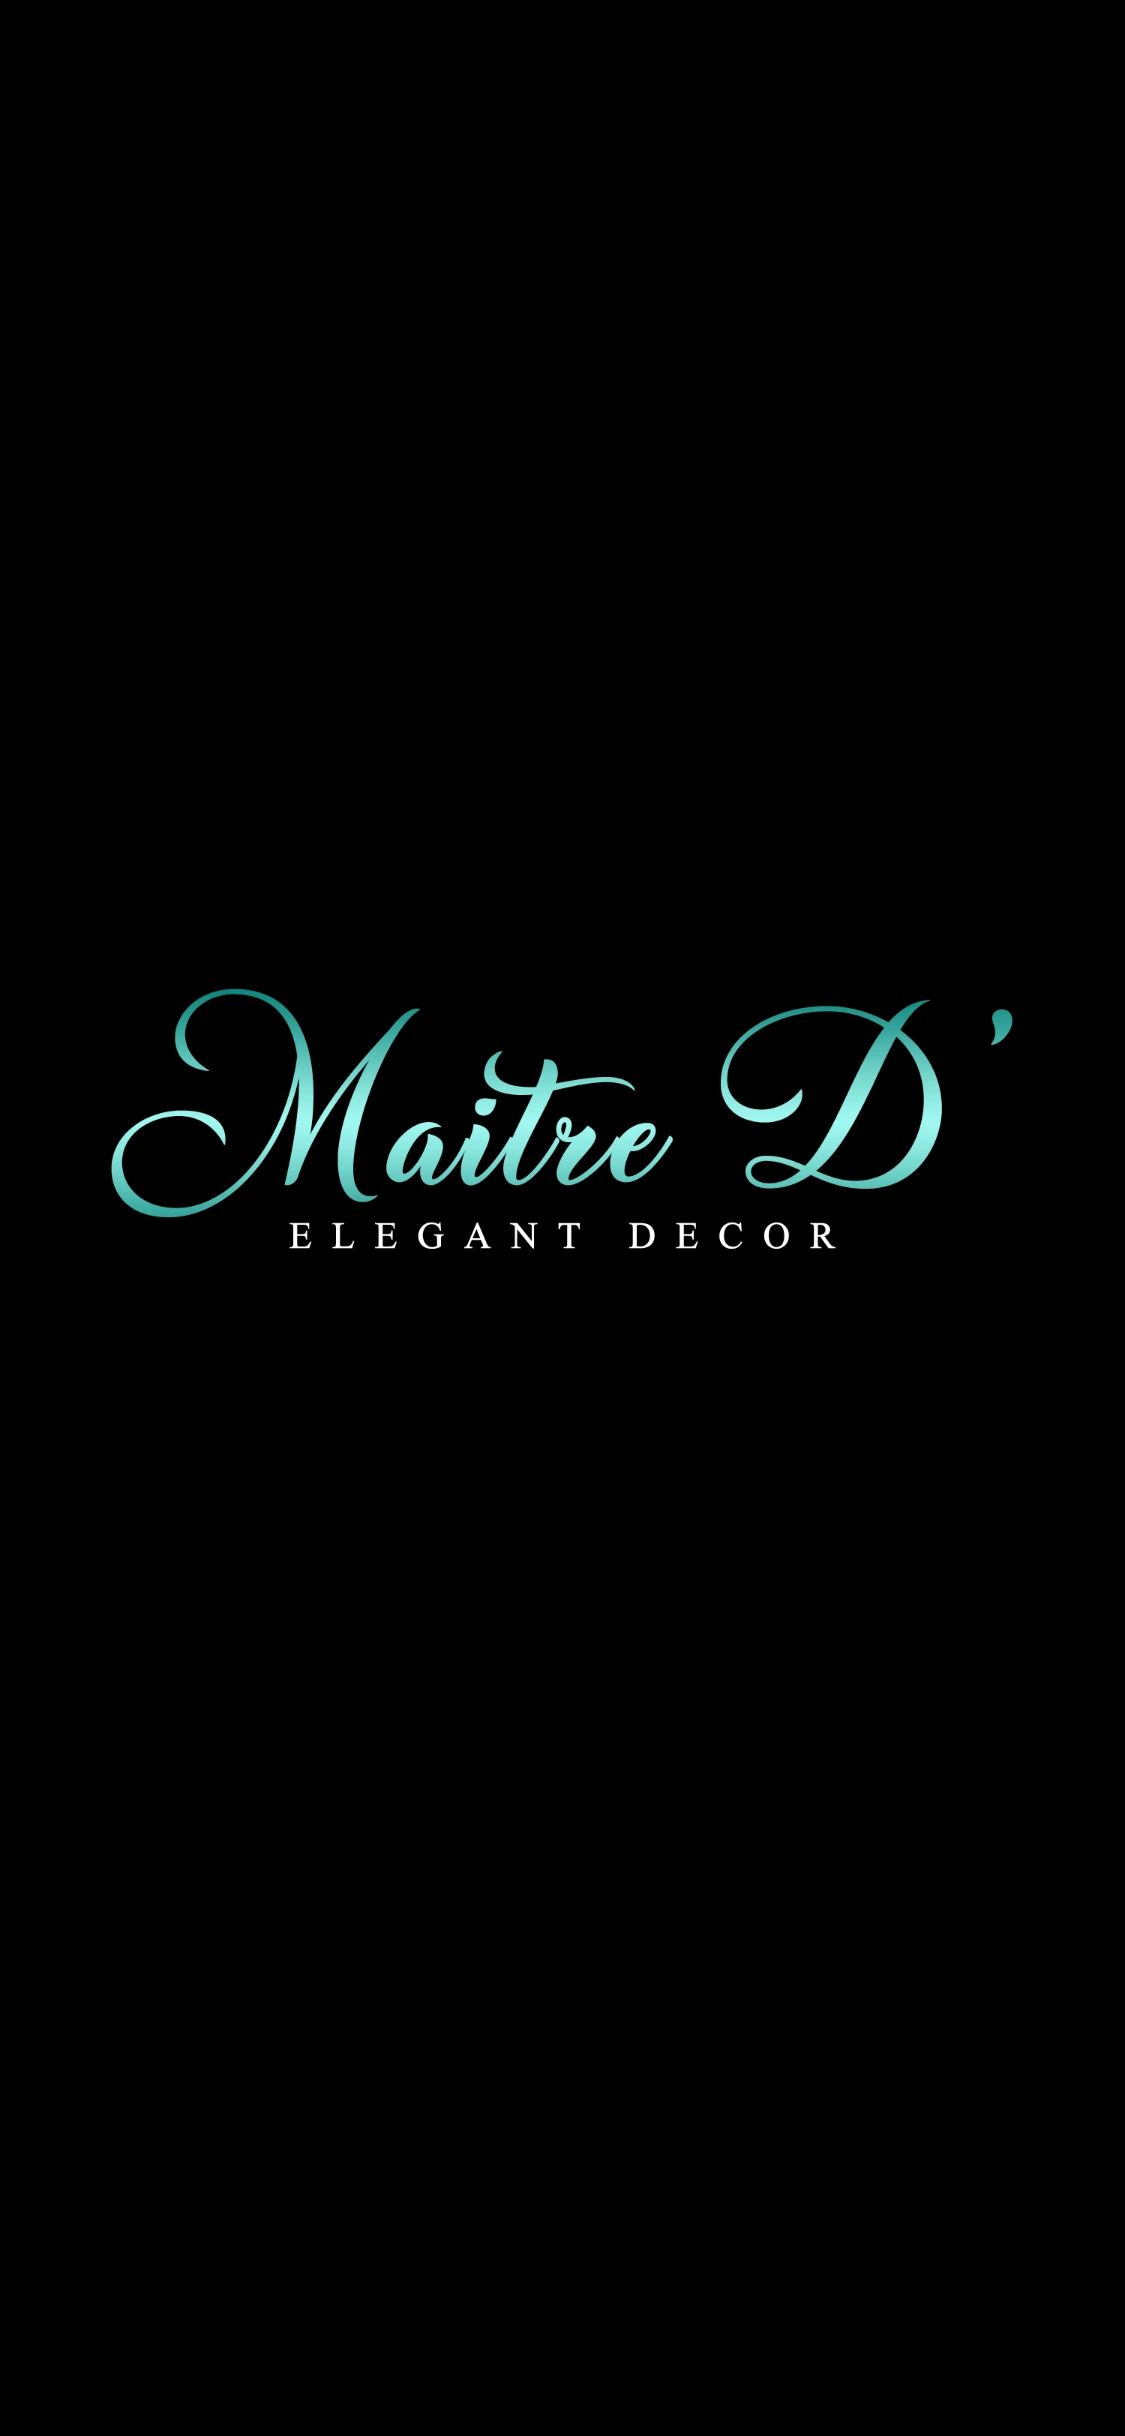 MAITRE D' LLC